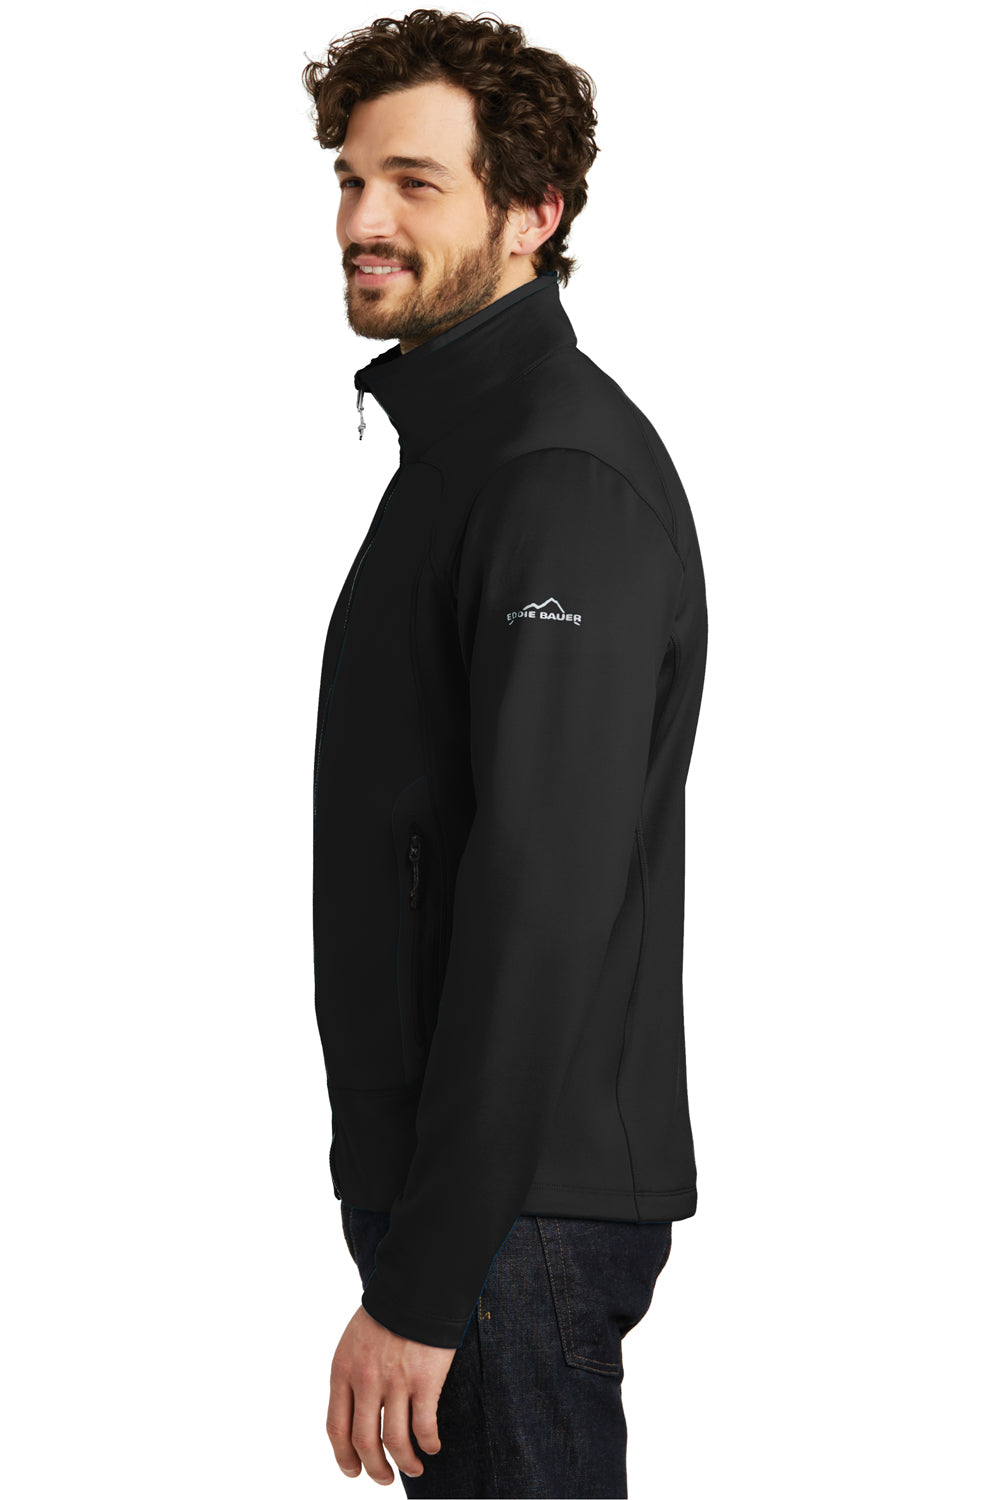 Eddie Bauer EB240 Mens Highpoint Pill Resistant Fleece Full Zip Jacket Black Model Side